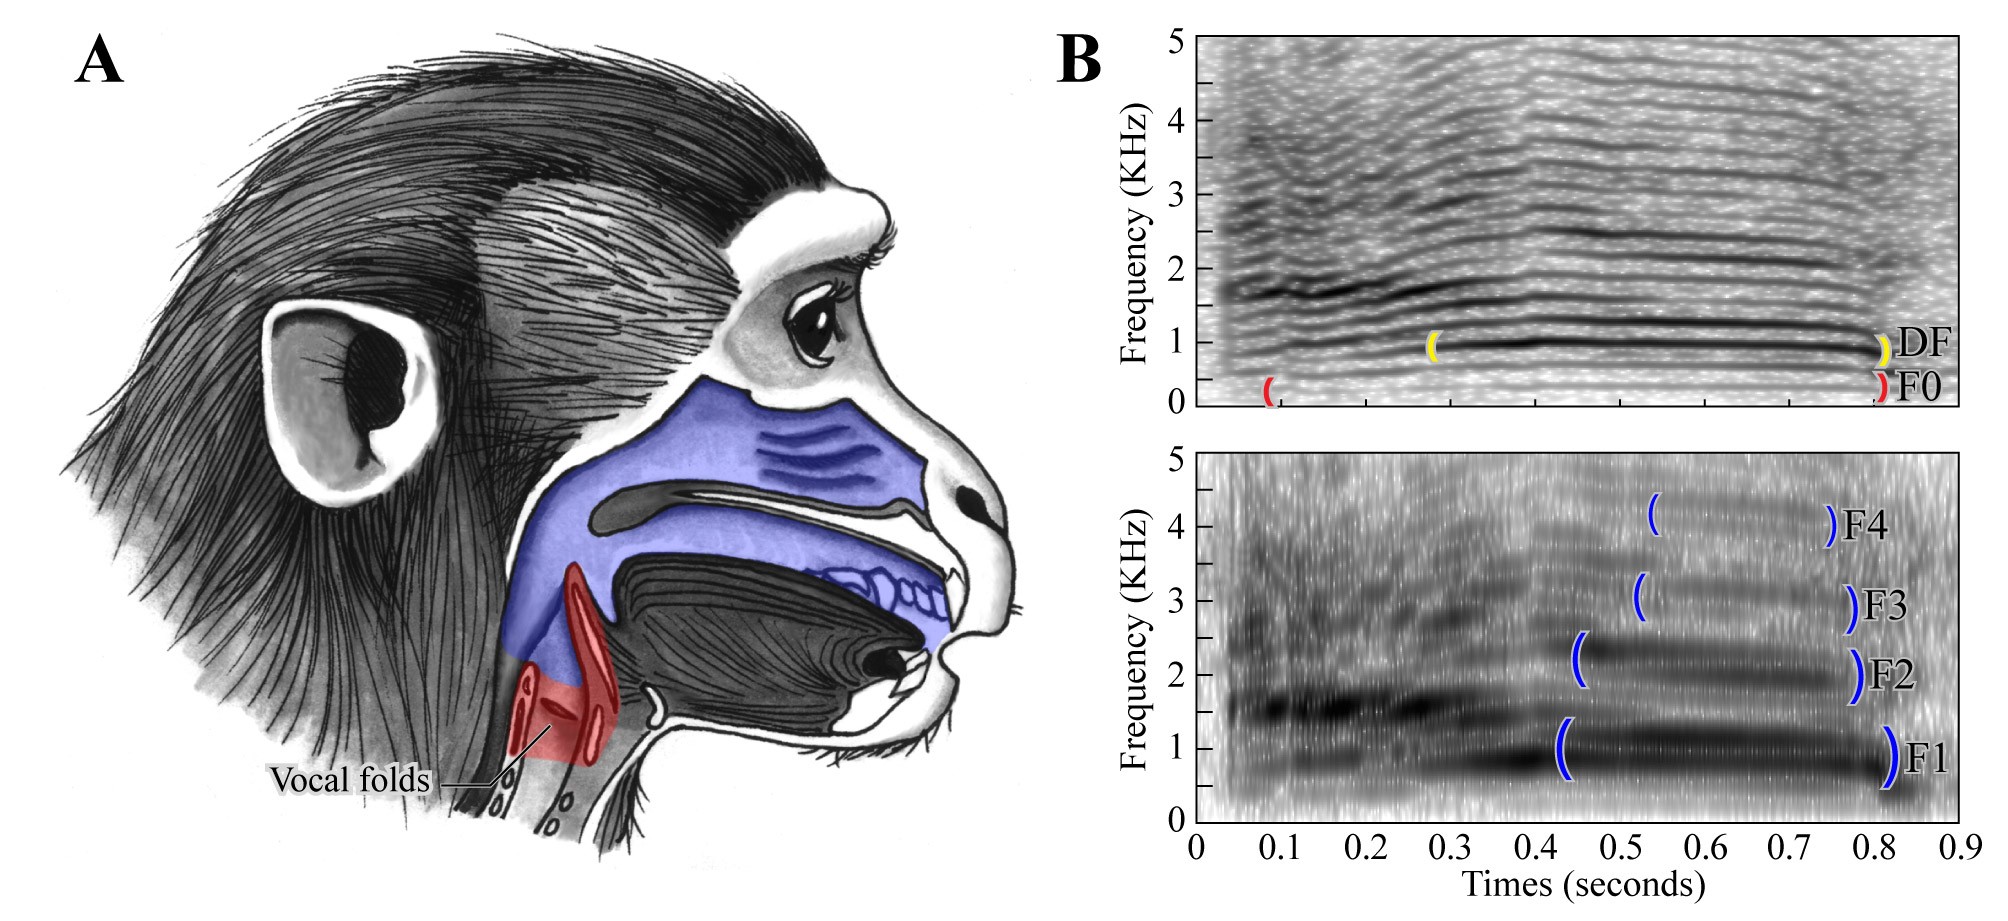 Body size and vocalization in primates and carnivores | Scientific Reports